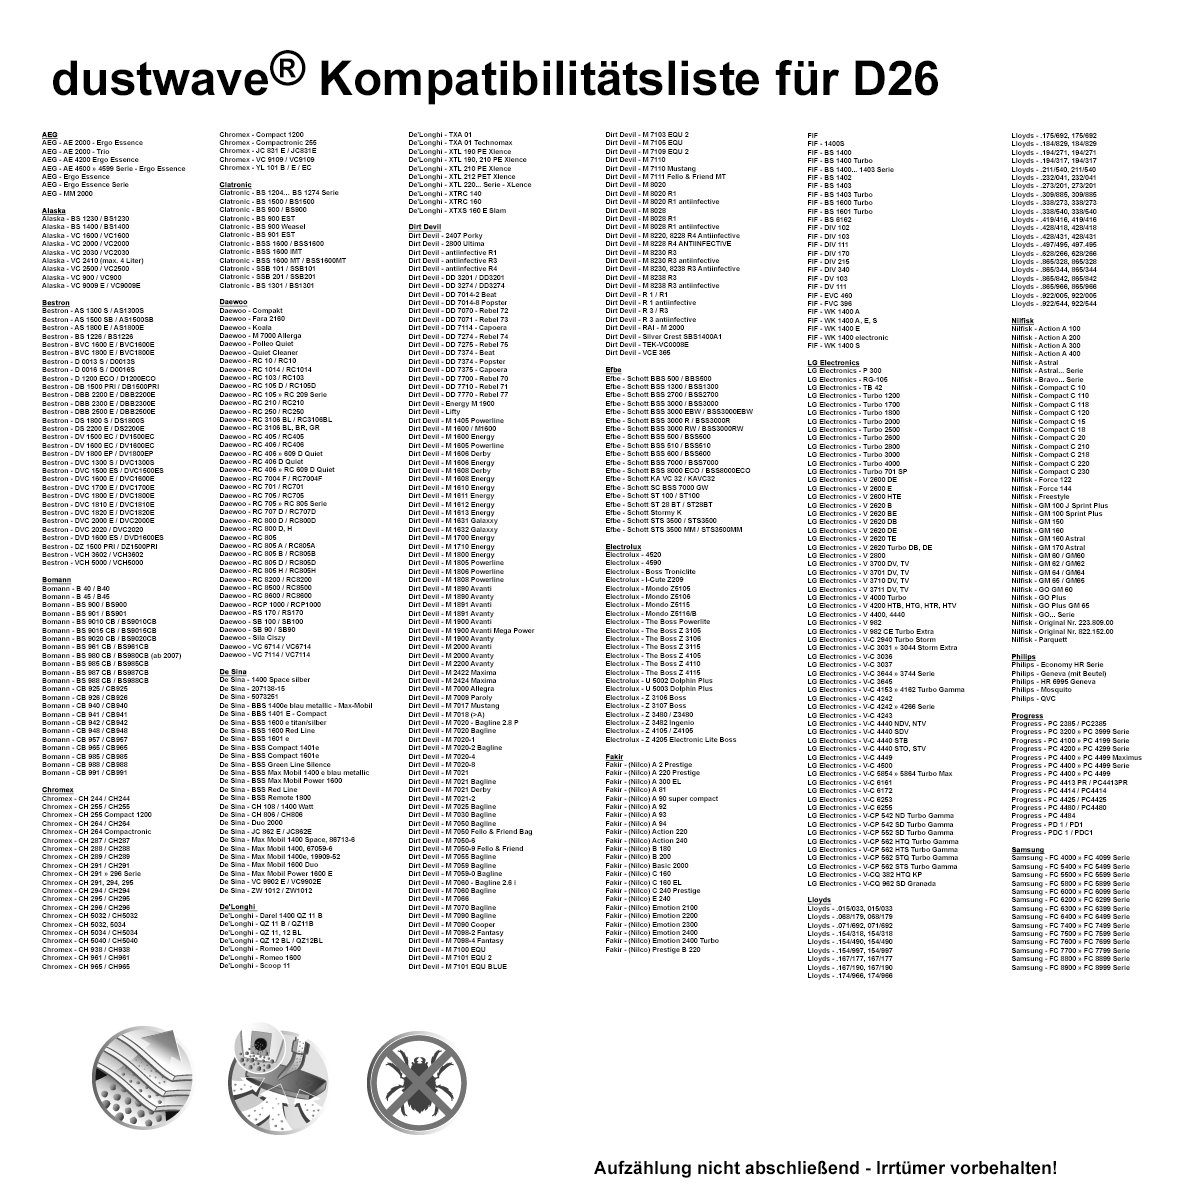 R Dustwave Staubsaugerbeutel Vulcano, + Staubsaugerbeutel für St., 15x15cm Beem (ca. Hepa-Filter VC-358 1 - 1 Test-Set, zuschneidbar) Test-Set, Blitz - passend 1